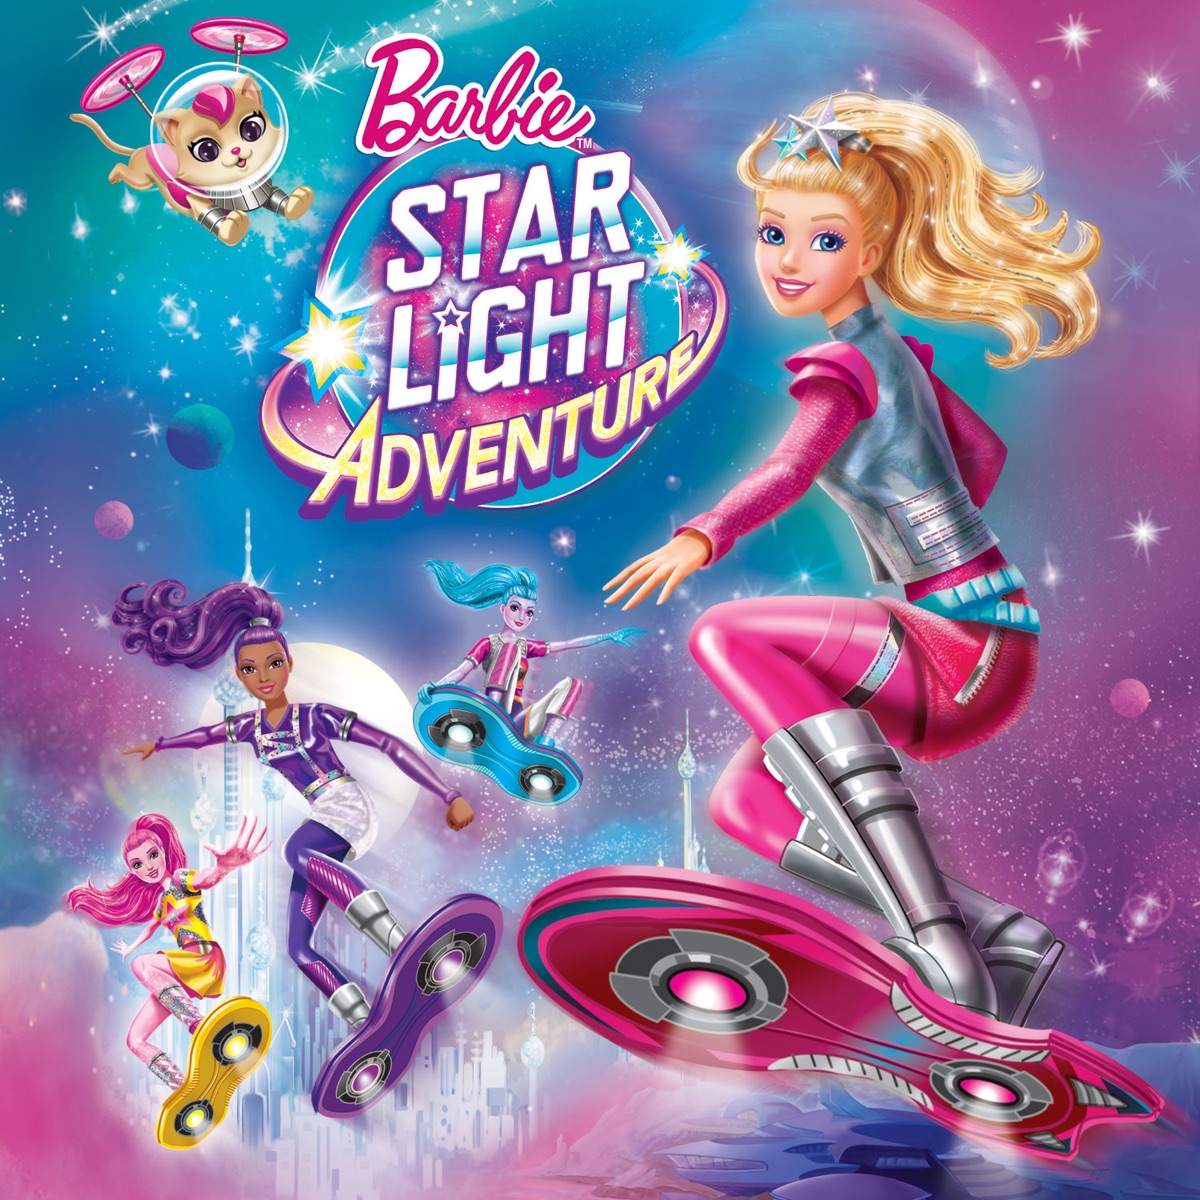 Barbie seikkailee avaruudessa (Original Motion Picture Soundtrack) - EP -  Album by Barbie - Apple Music